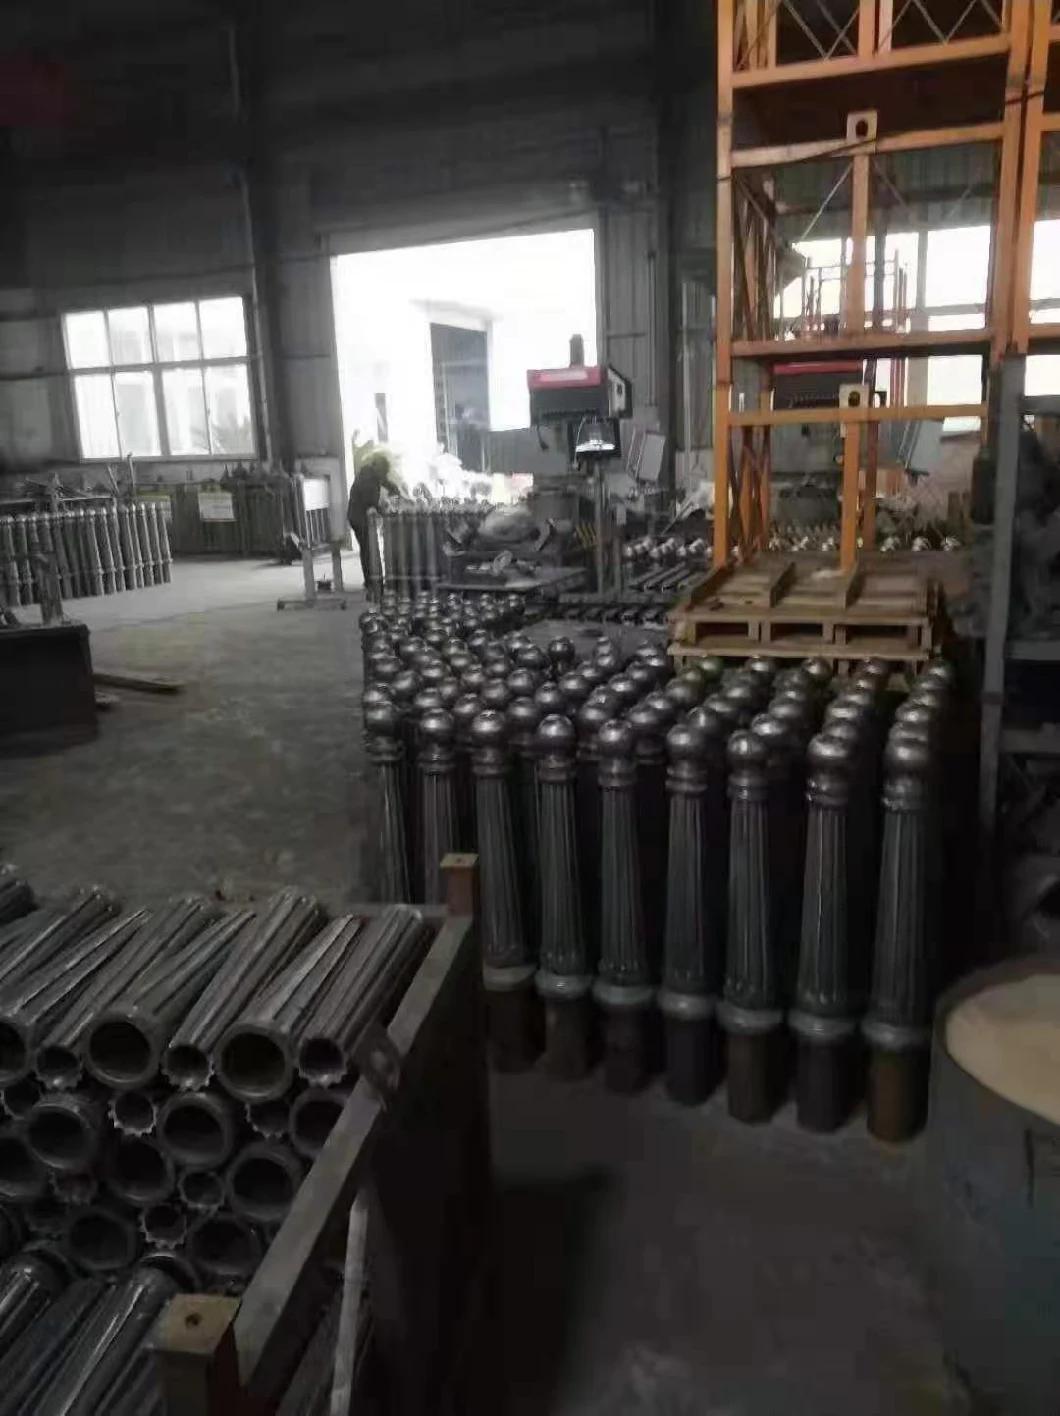 China Factory OEM Sand Casting Black Ductile Iron Aluminum Steel Parking Decorative Mooring Bollard Road Street safety Barrier